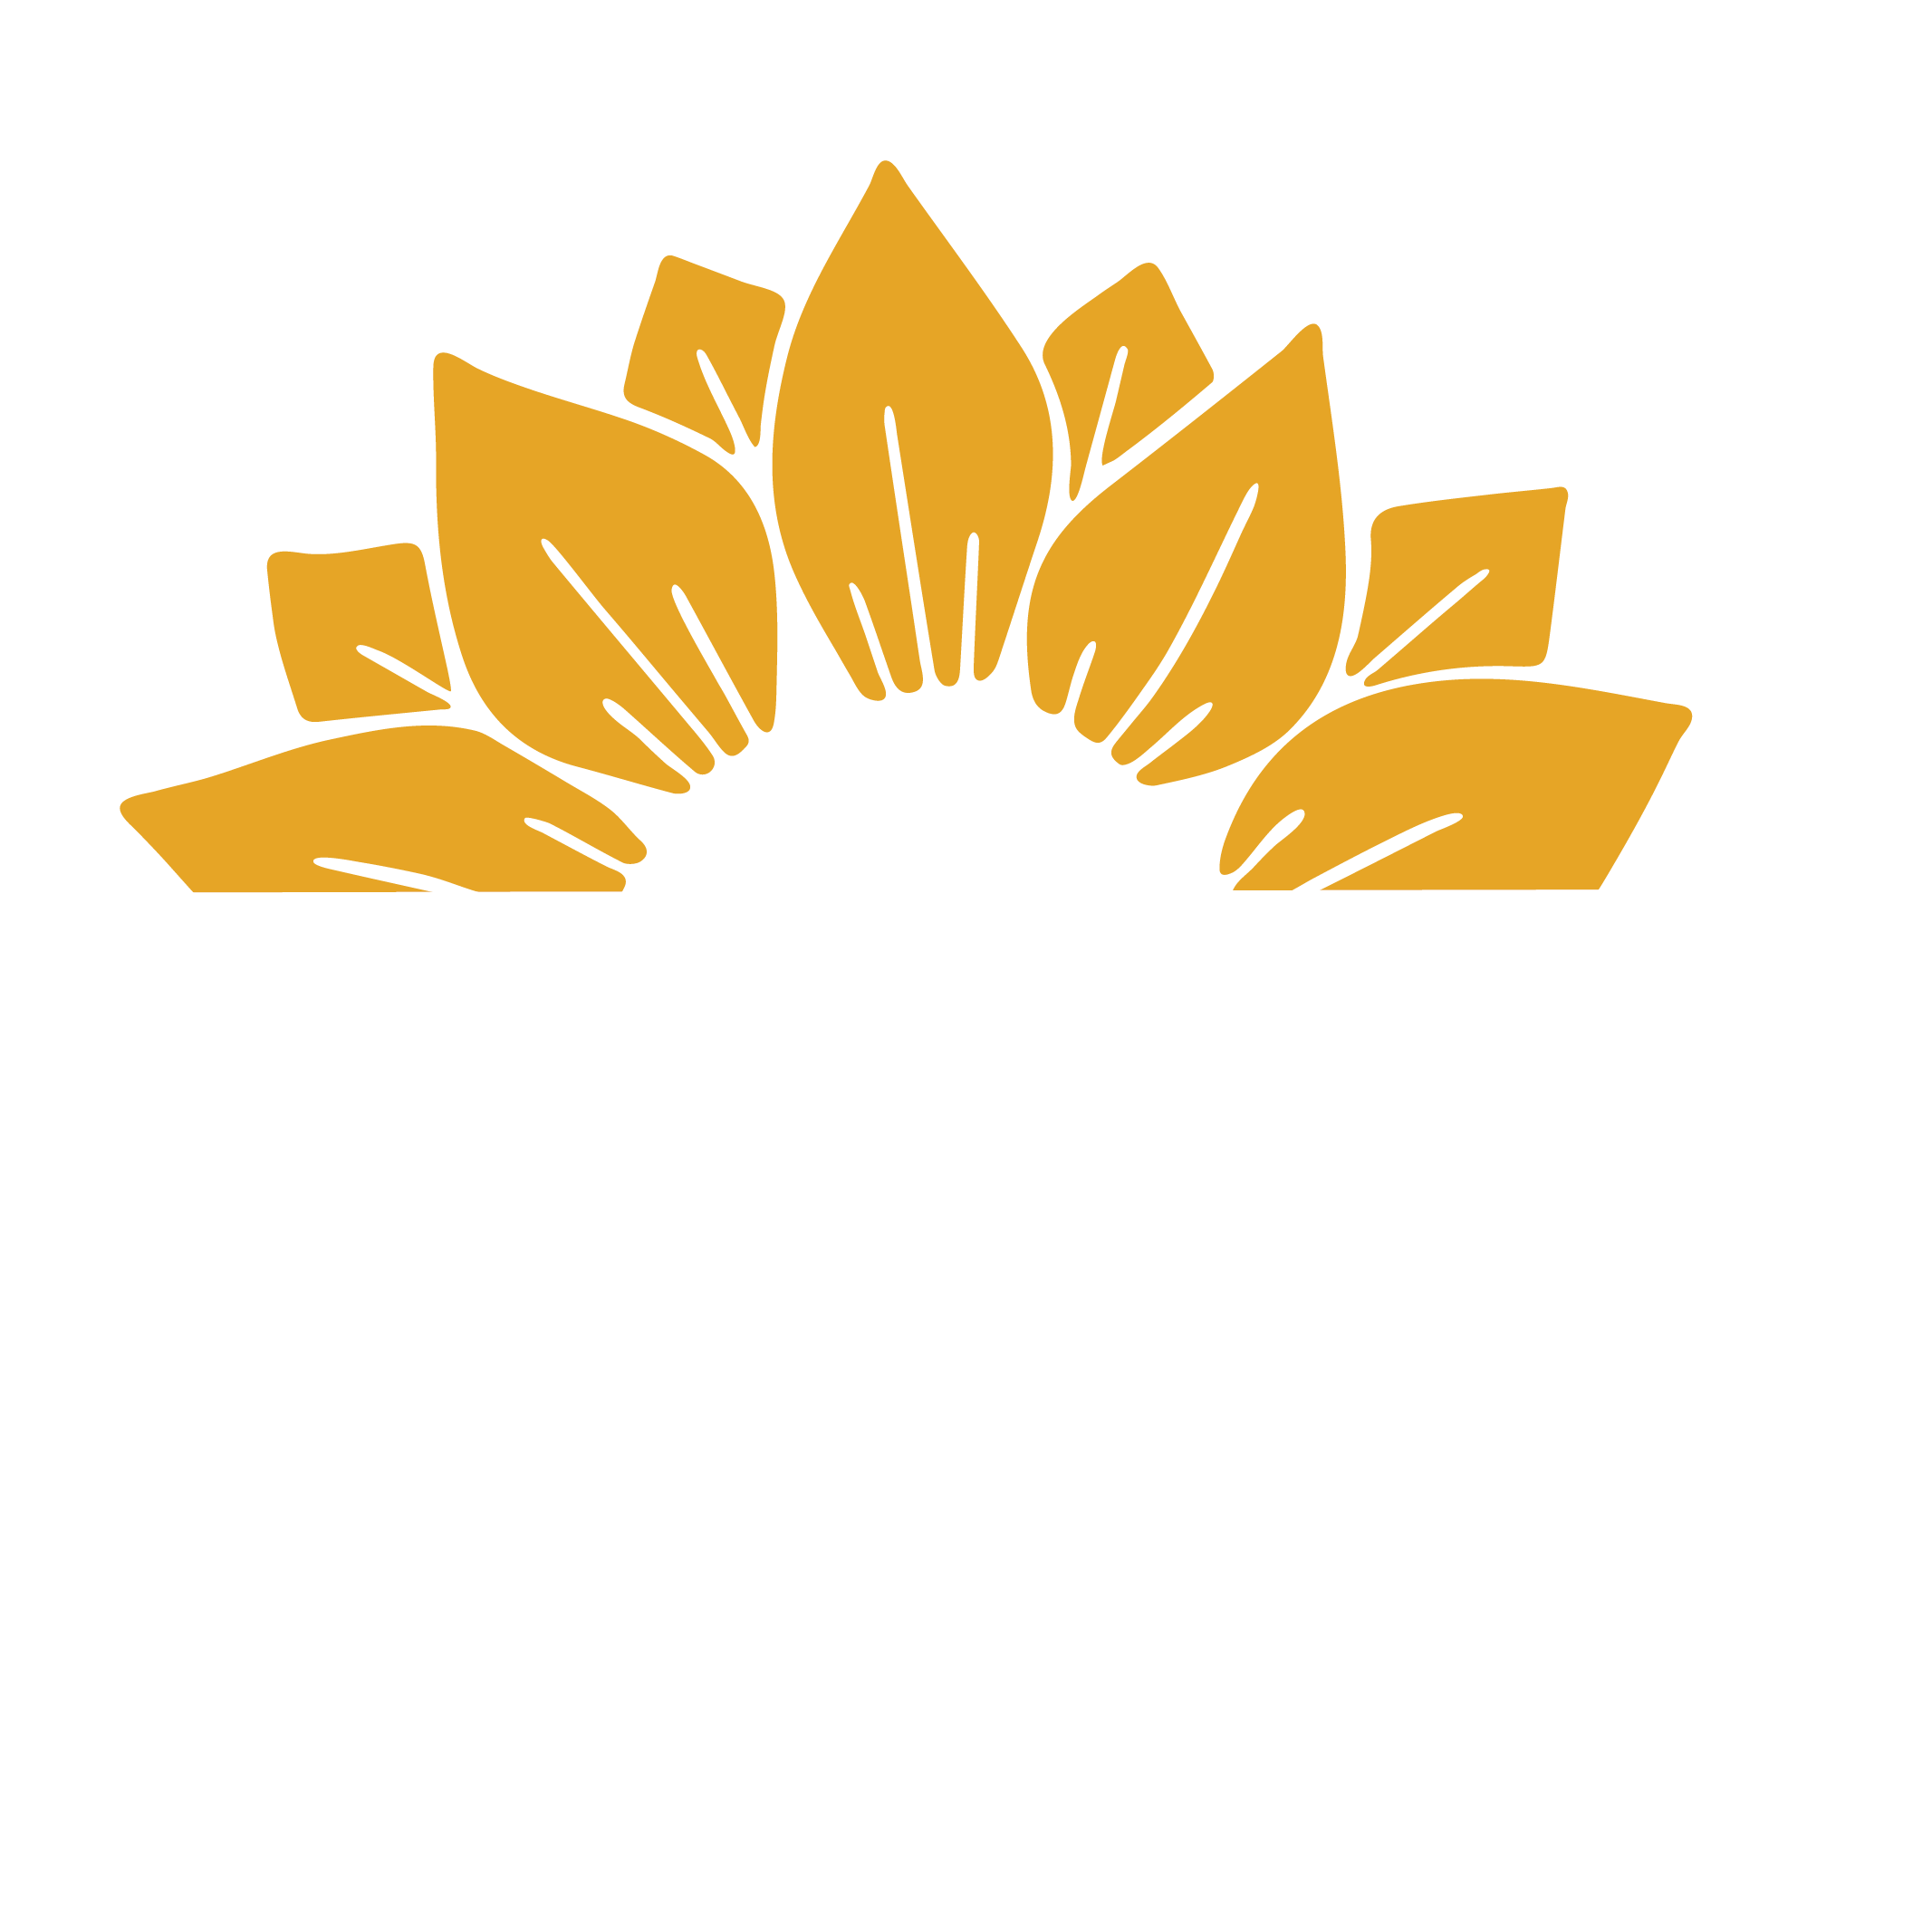 Association of Community Mental Health Centers of Kansas, Inc.